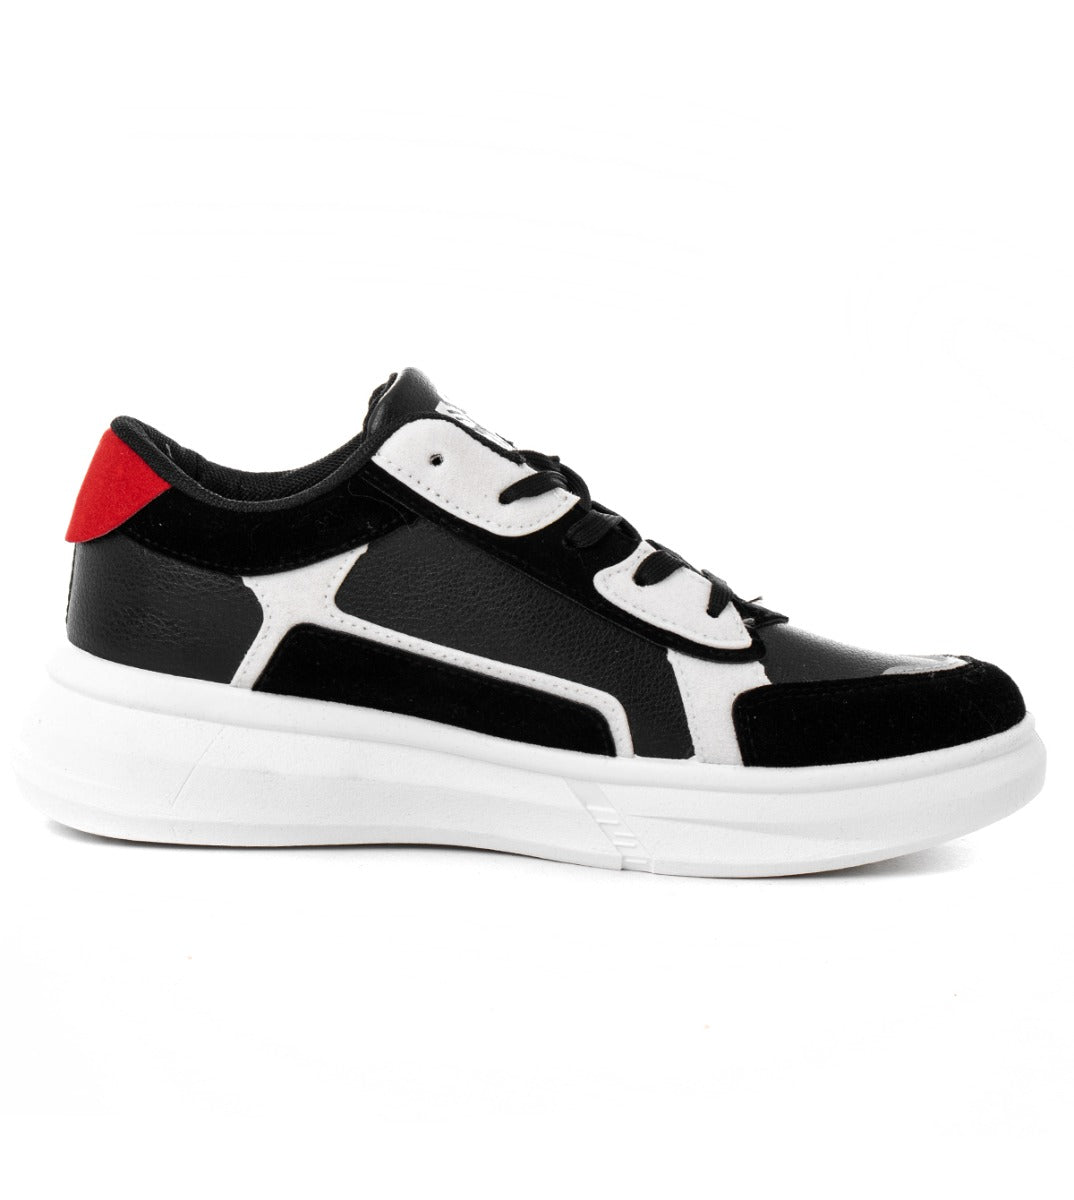 Scarpe Uomo Shoes Sneakers Sportiva Ecopelle Camoscio Nera GIOSAL-S1115A